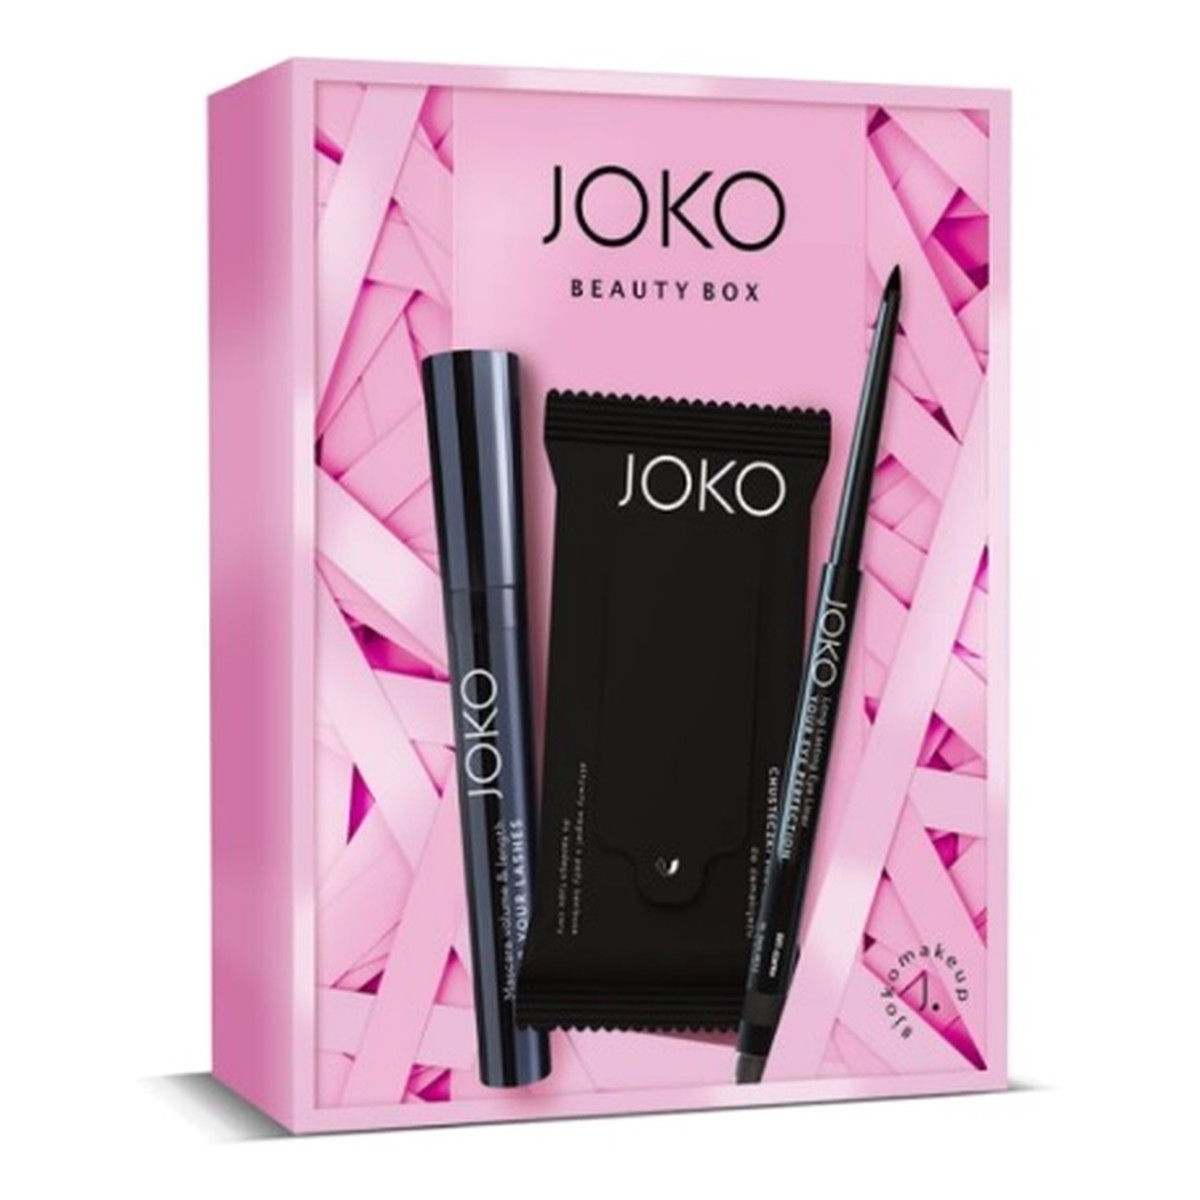 Joko Beauty Box 01 Zestaw pump your lashes mascara 9ml + eye pencil 001 + micellar wipes